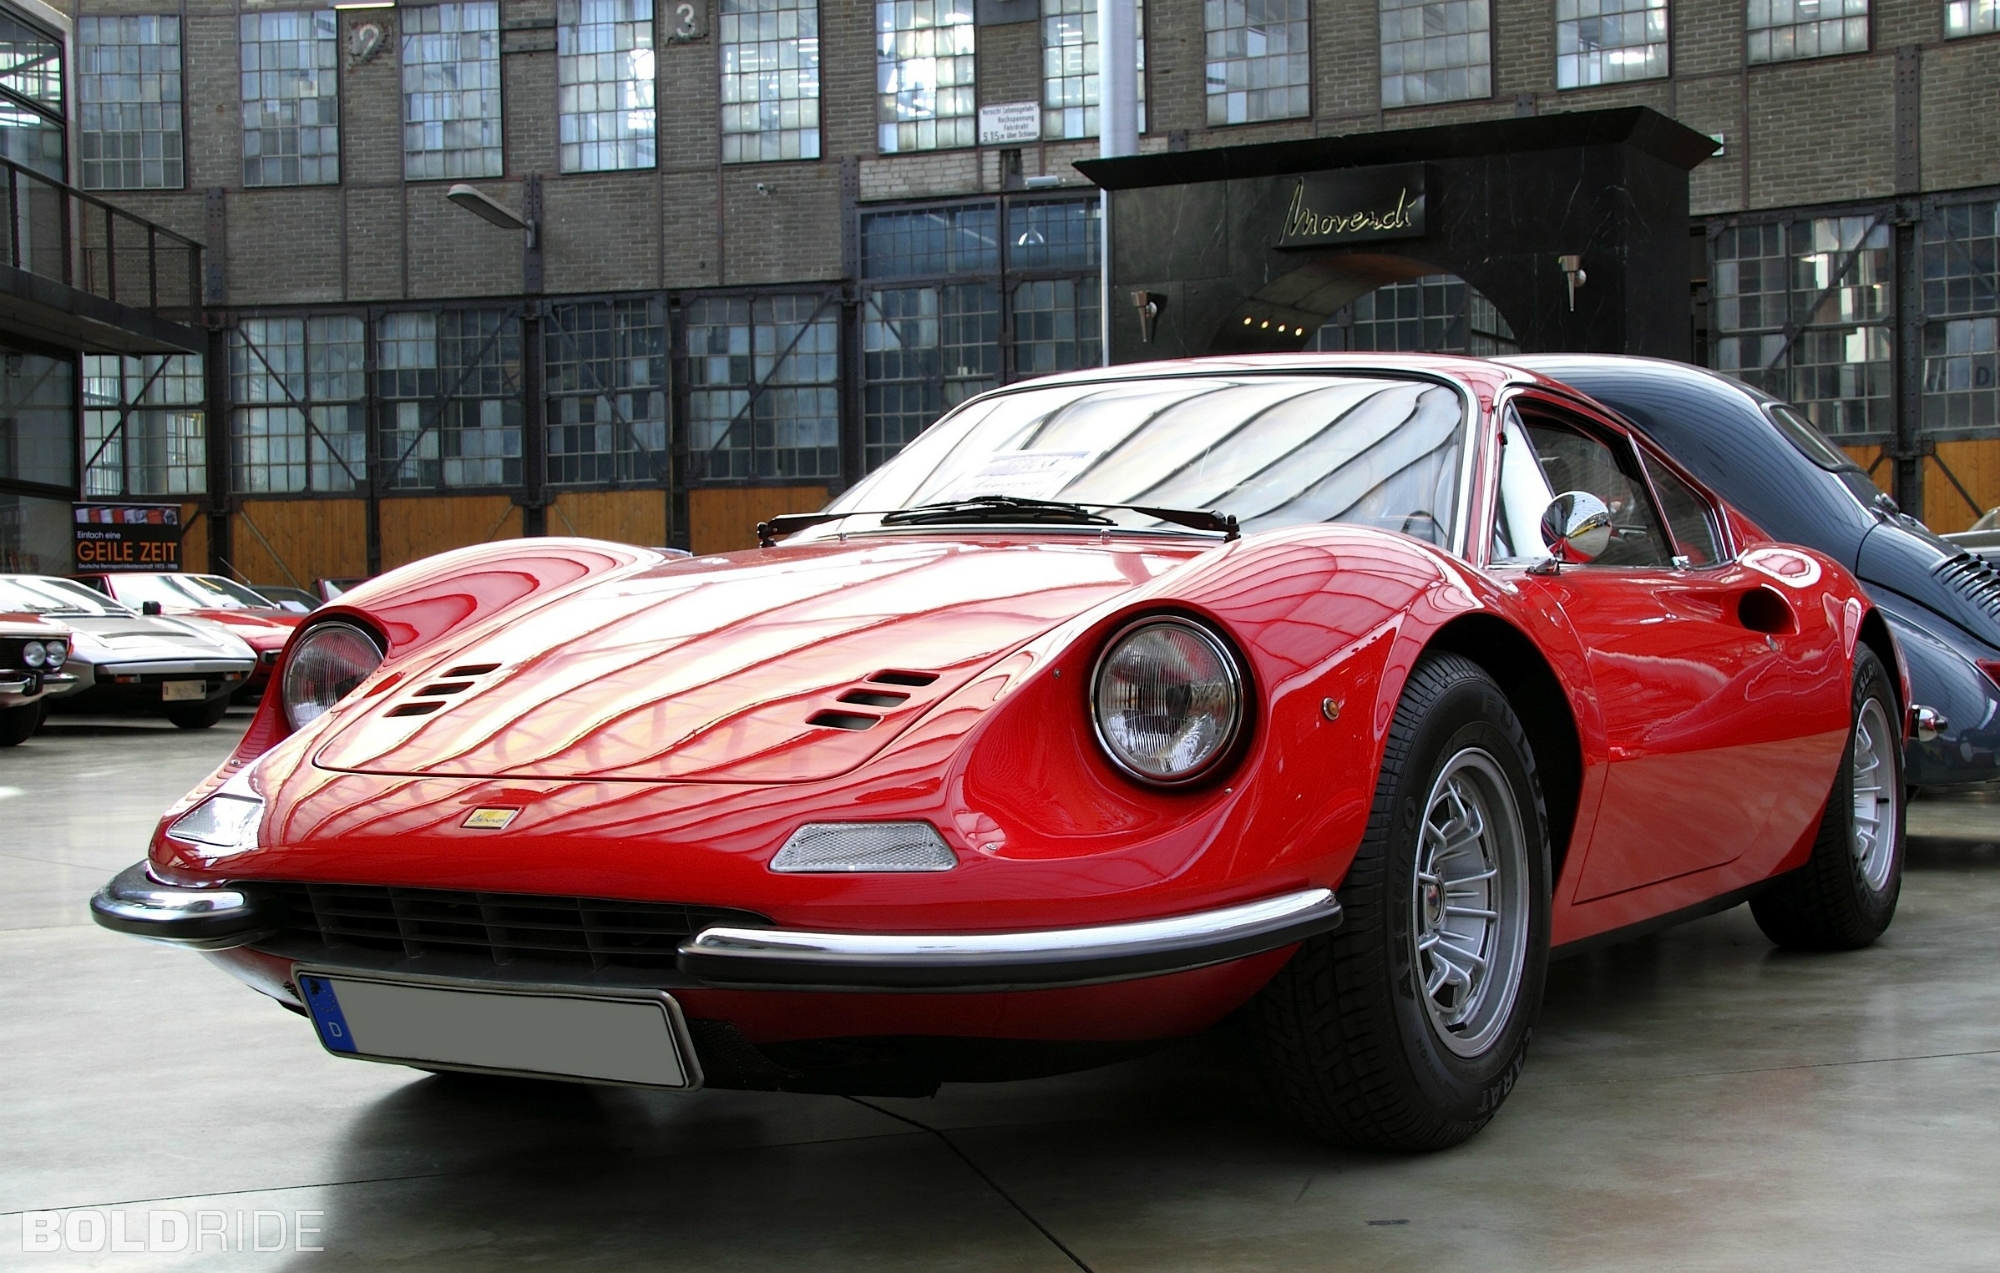 1969 Ferrari Dino 246 Gt D Marge - funjooke.